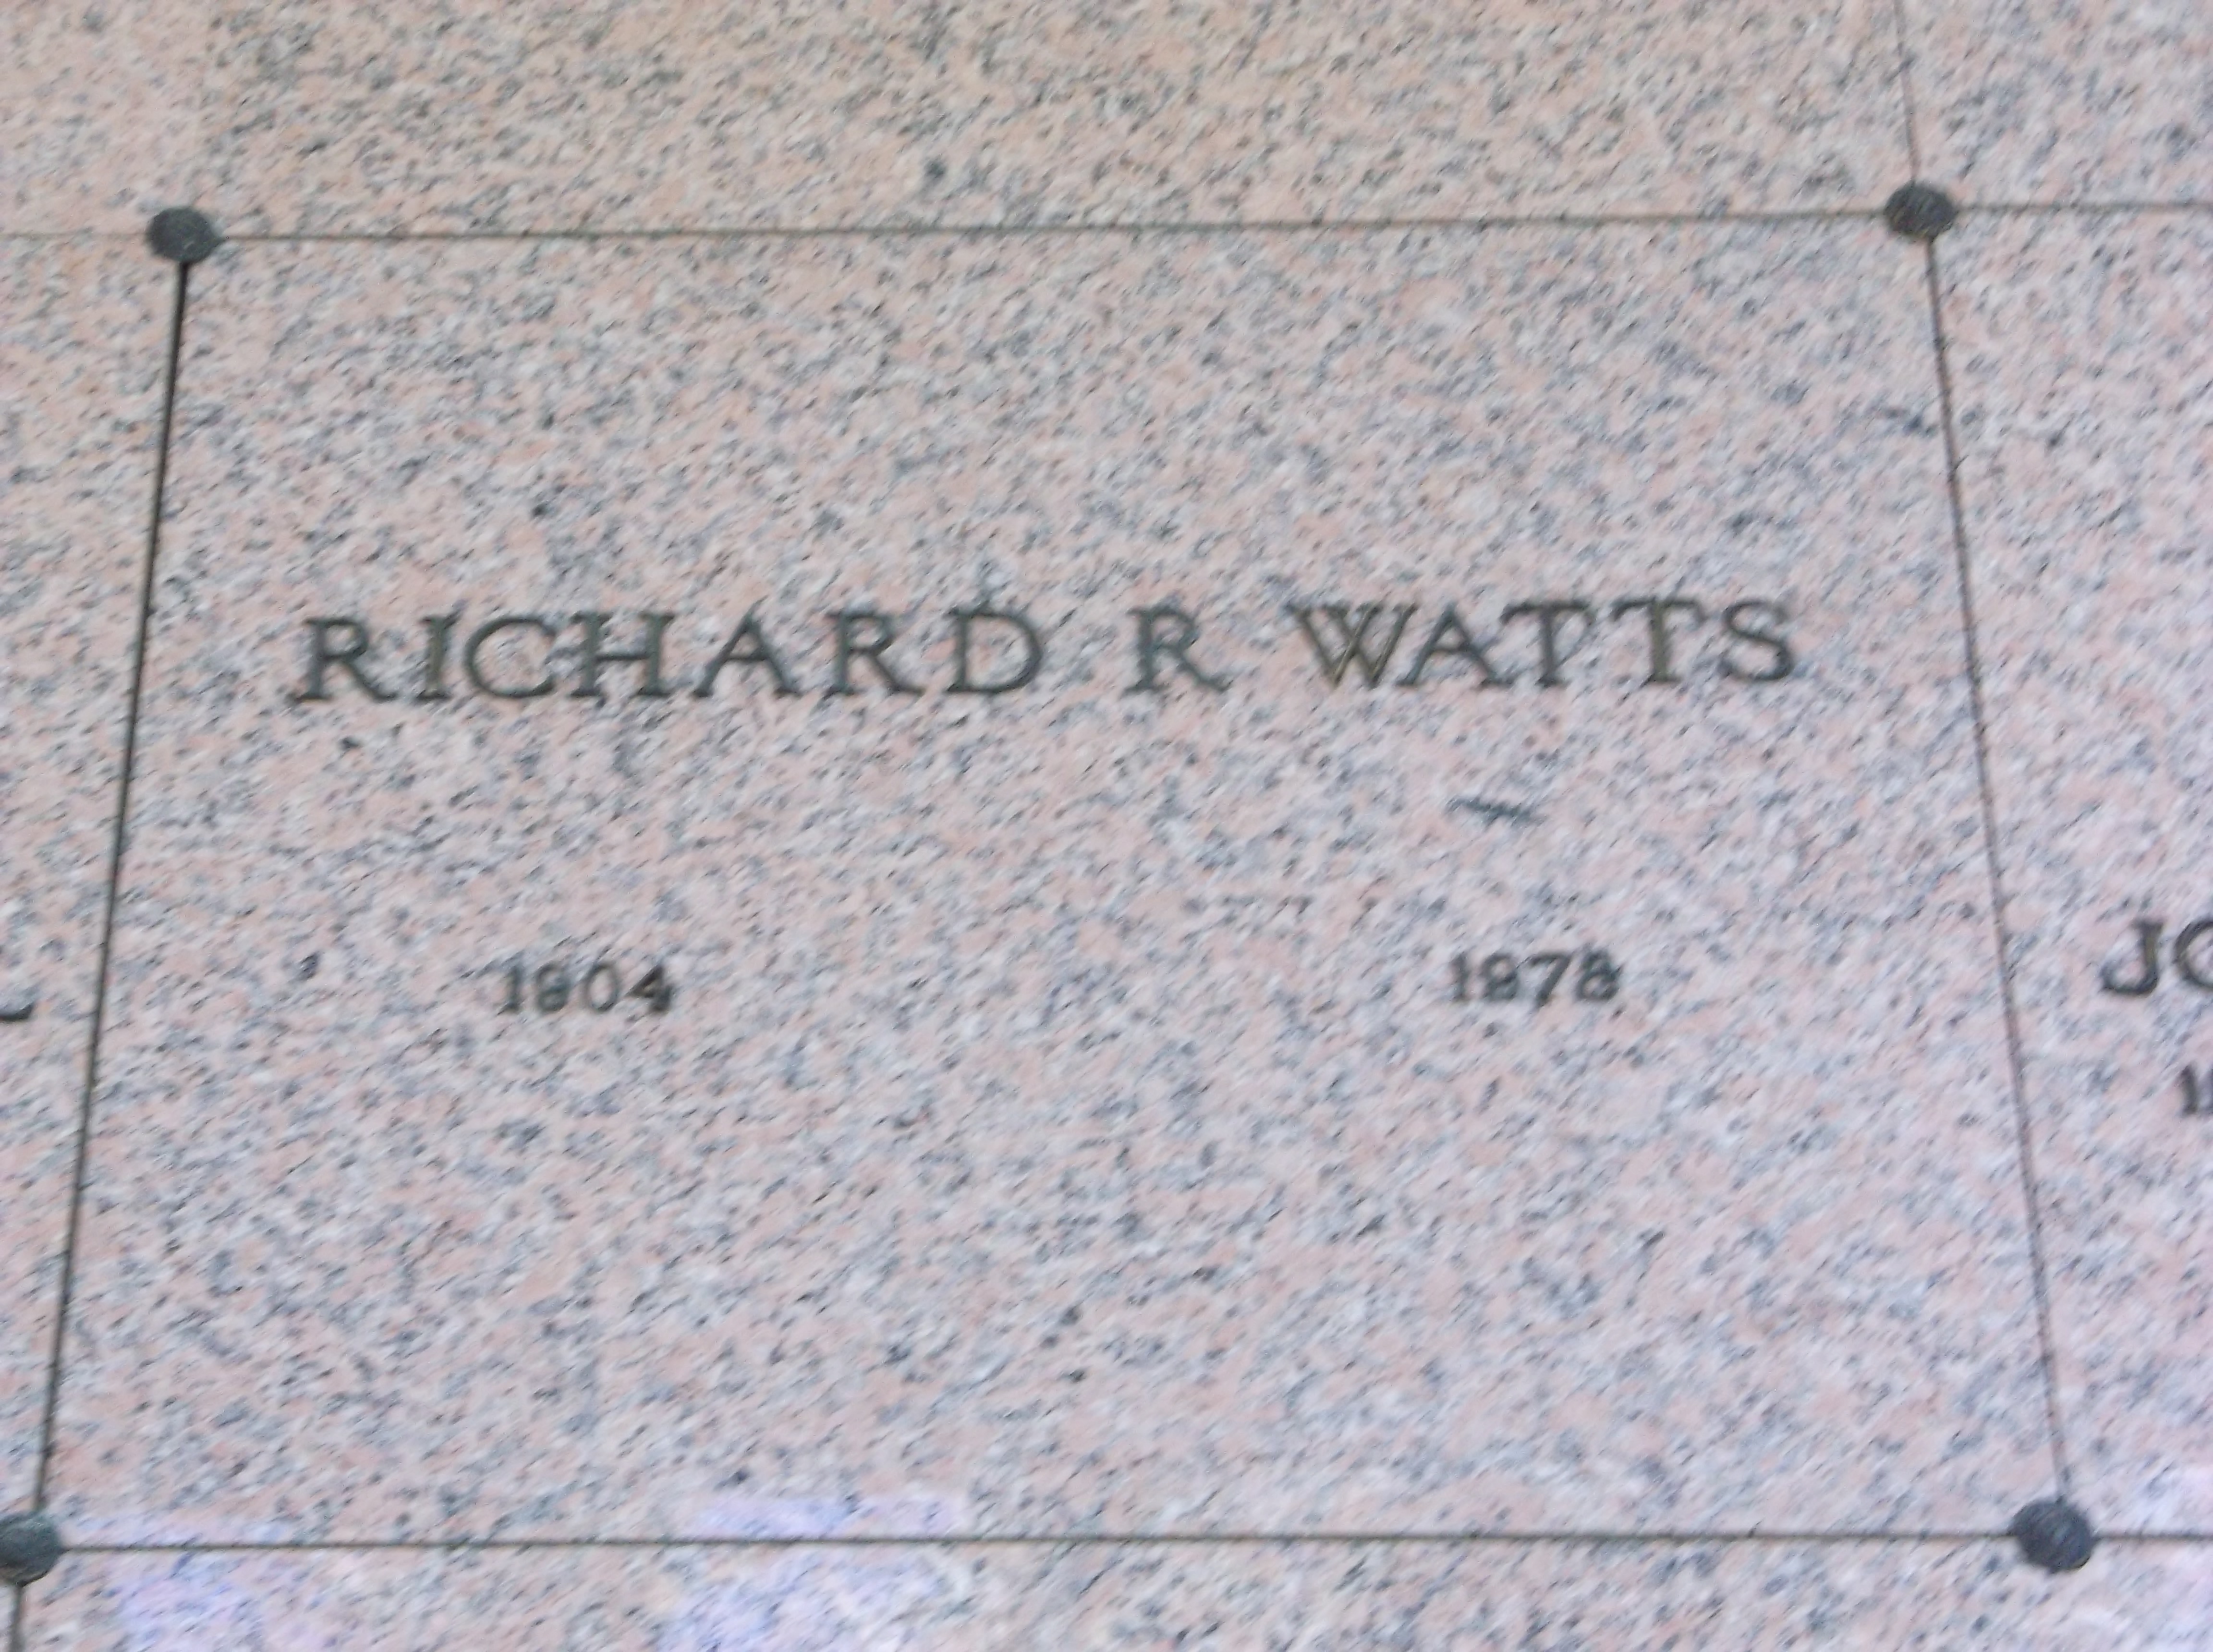 Richard R Watts